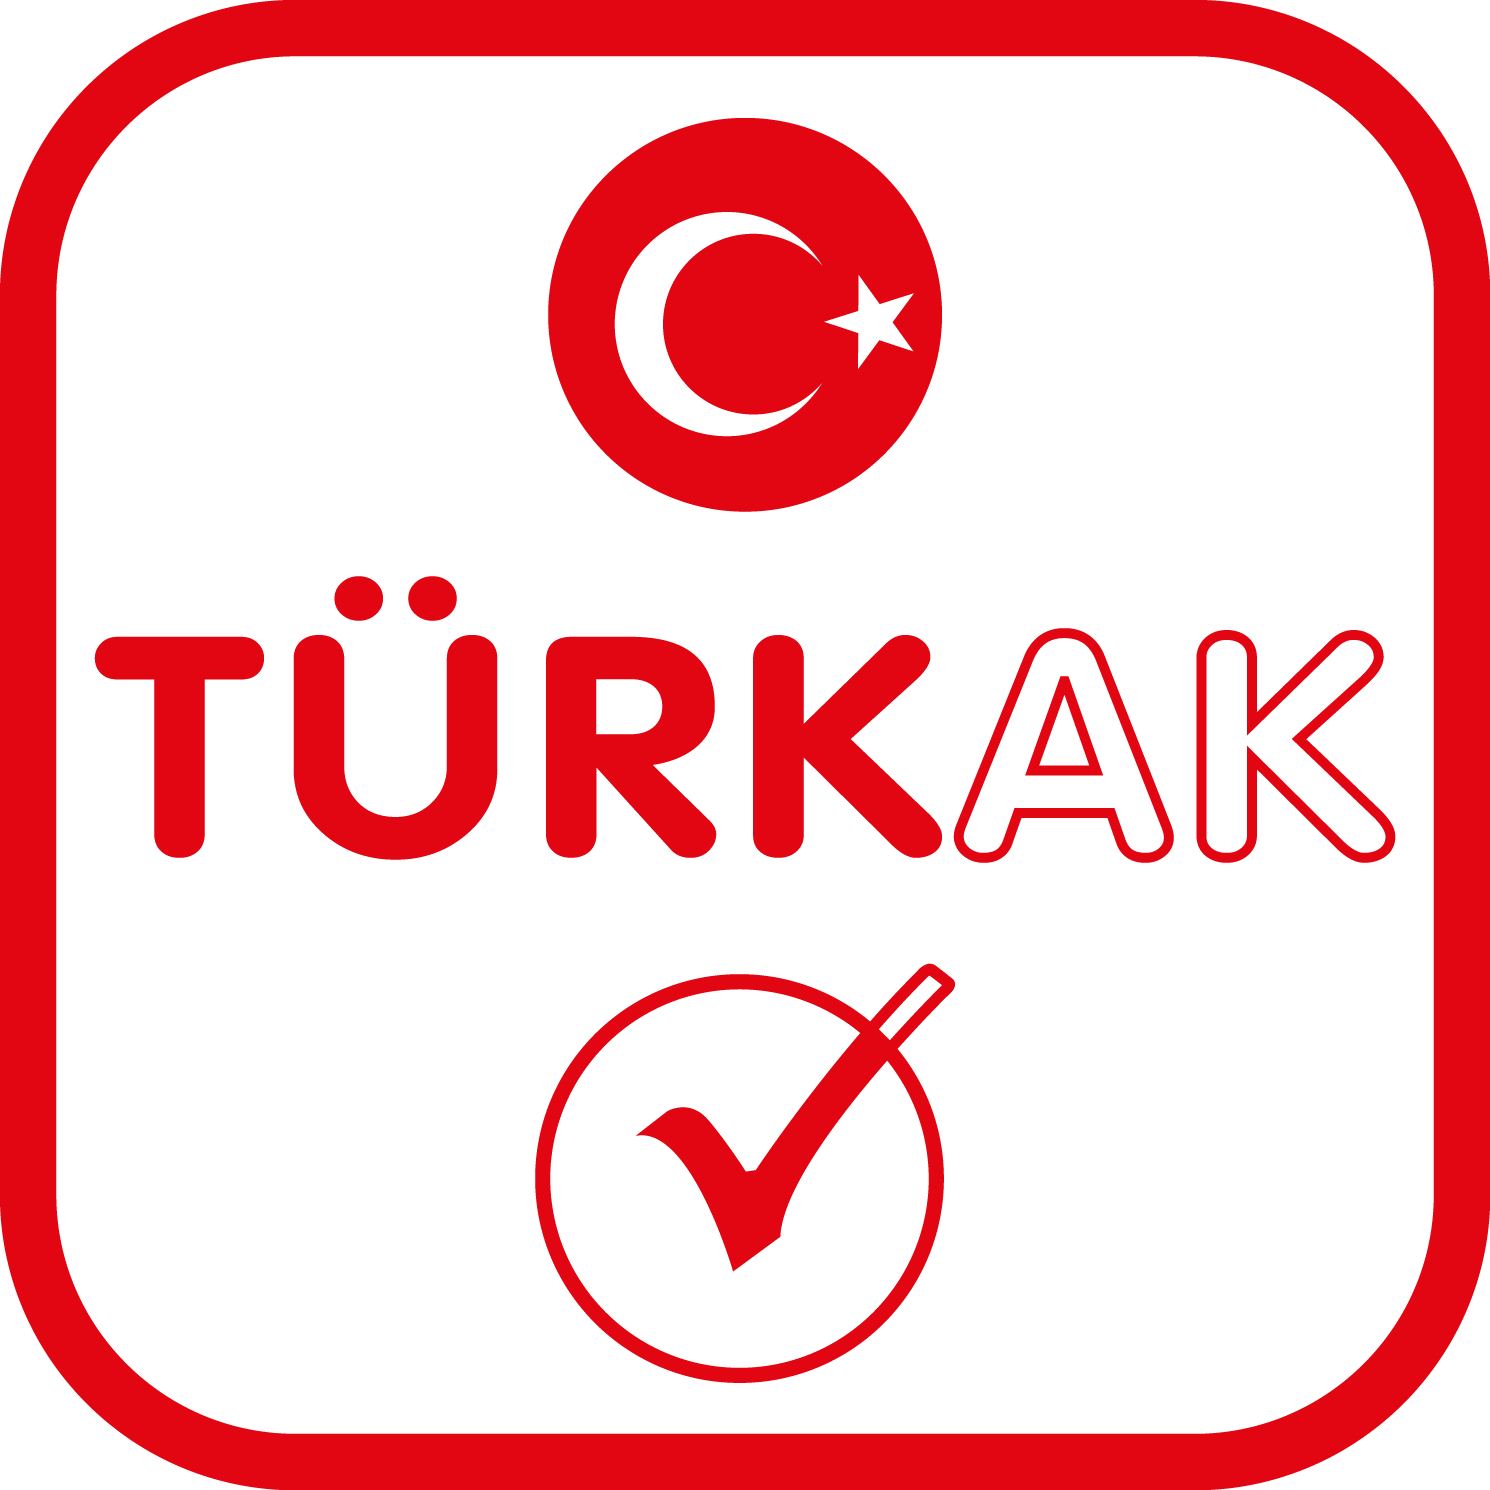 TÜRKAK Logo - Türk Akreditasyon Kurumu [turkak.org.tr]